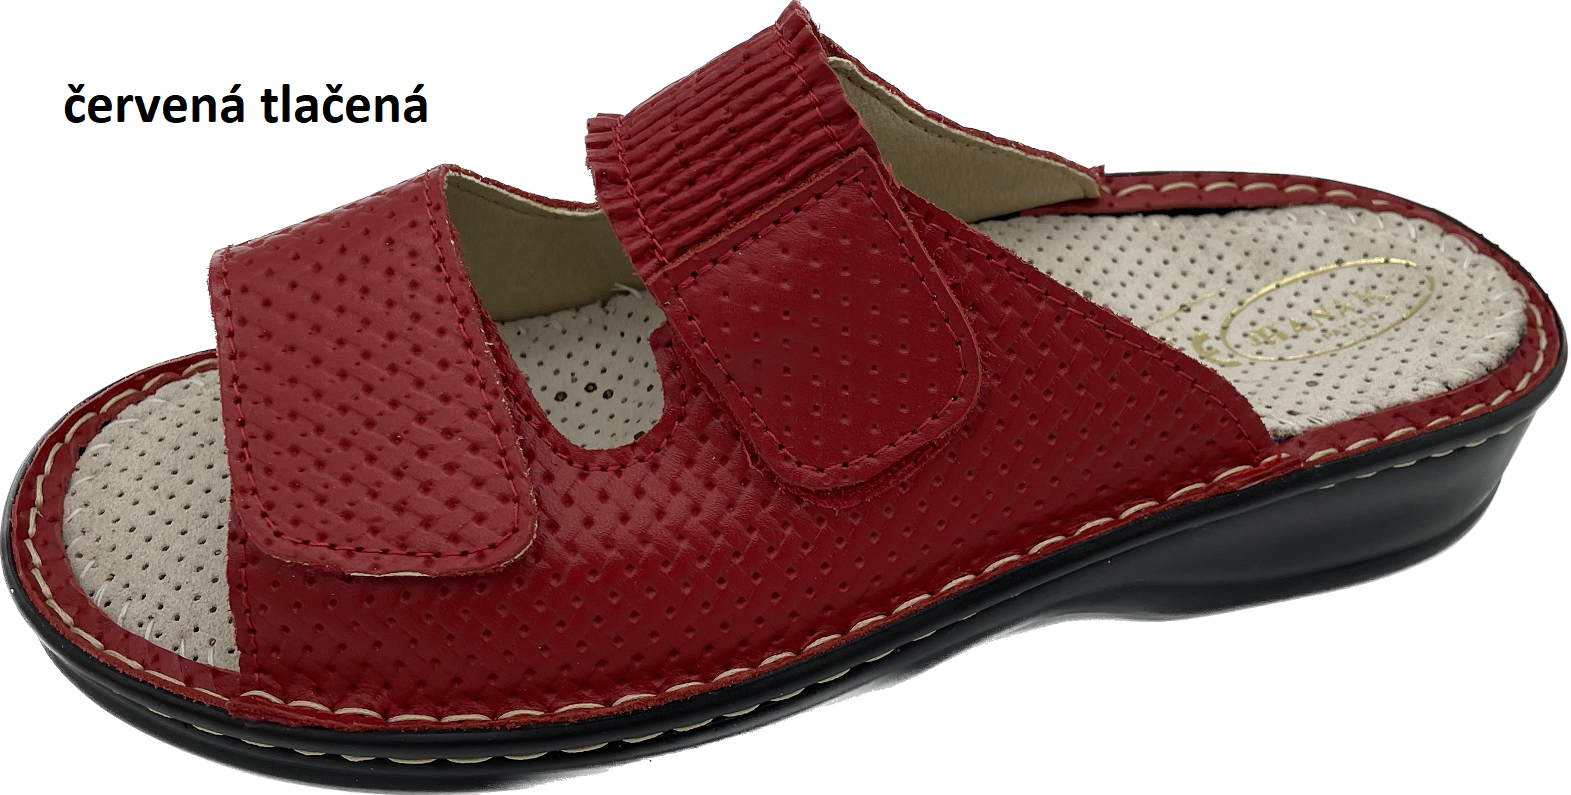 Boty Hanák vzor 304 - černá podešev Barva usně: červená tlačená, Velikosti obuvi: 41